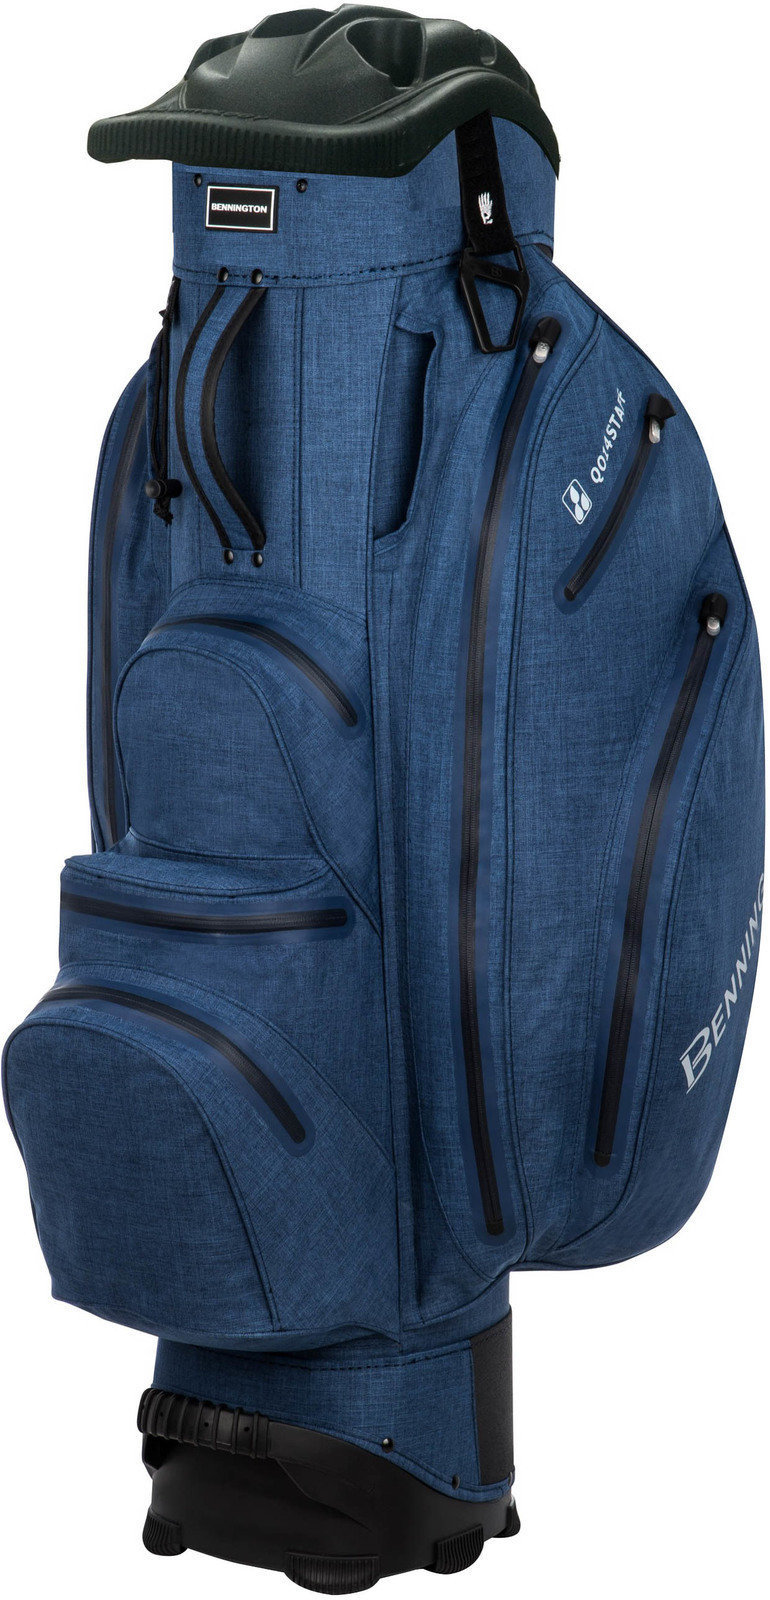 Cart Bag Bennington QO 14 Premium Waterproof Cart Bag Denim Blue